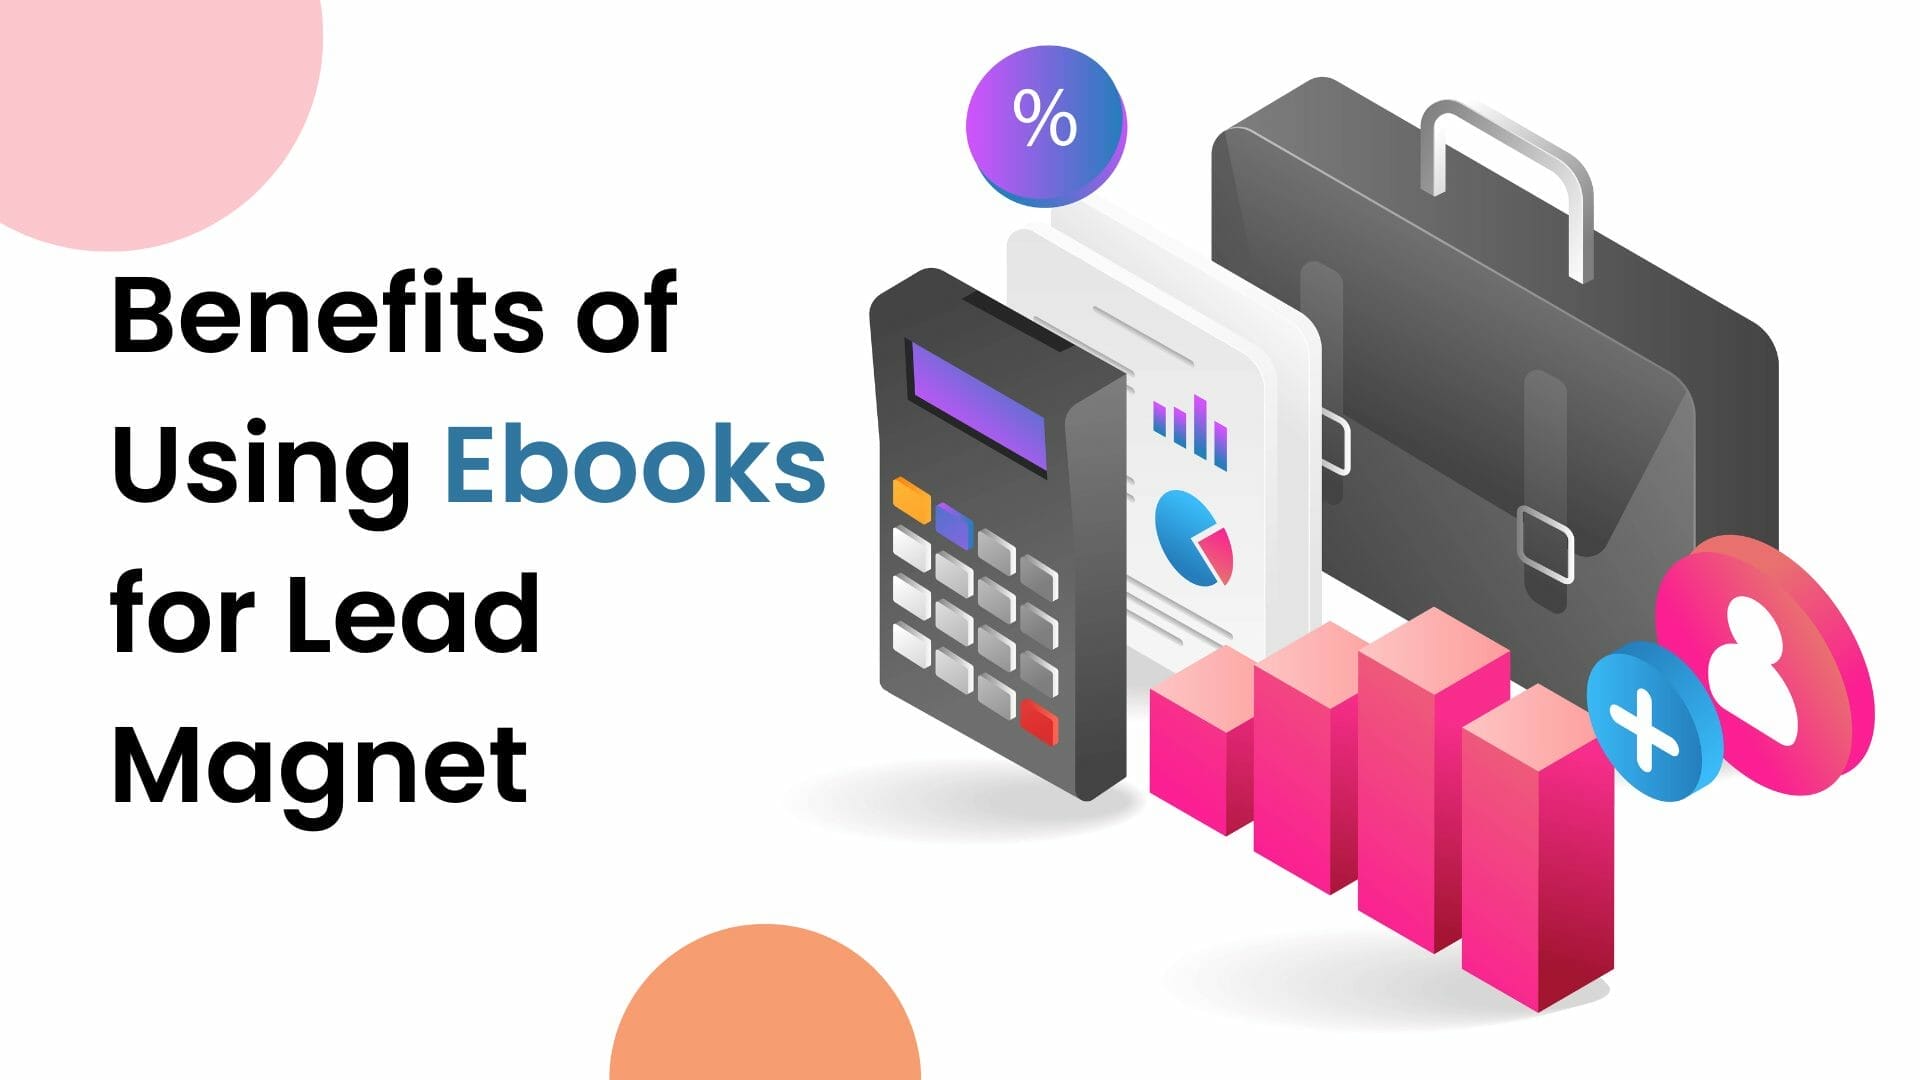 Benefits of ebooks